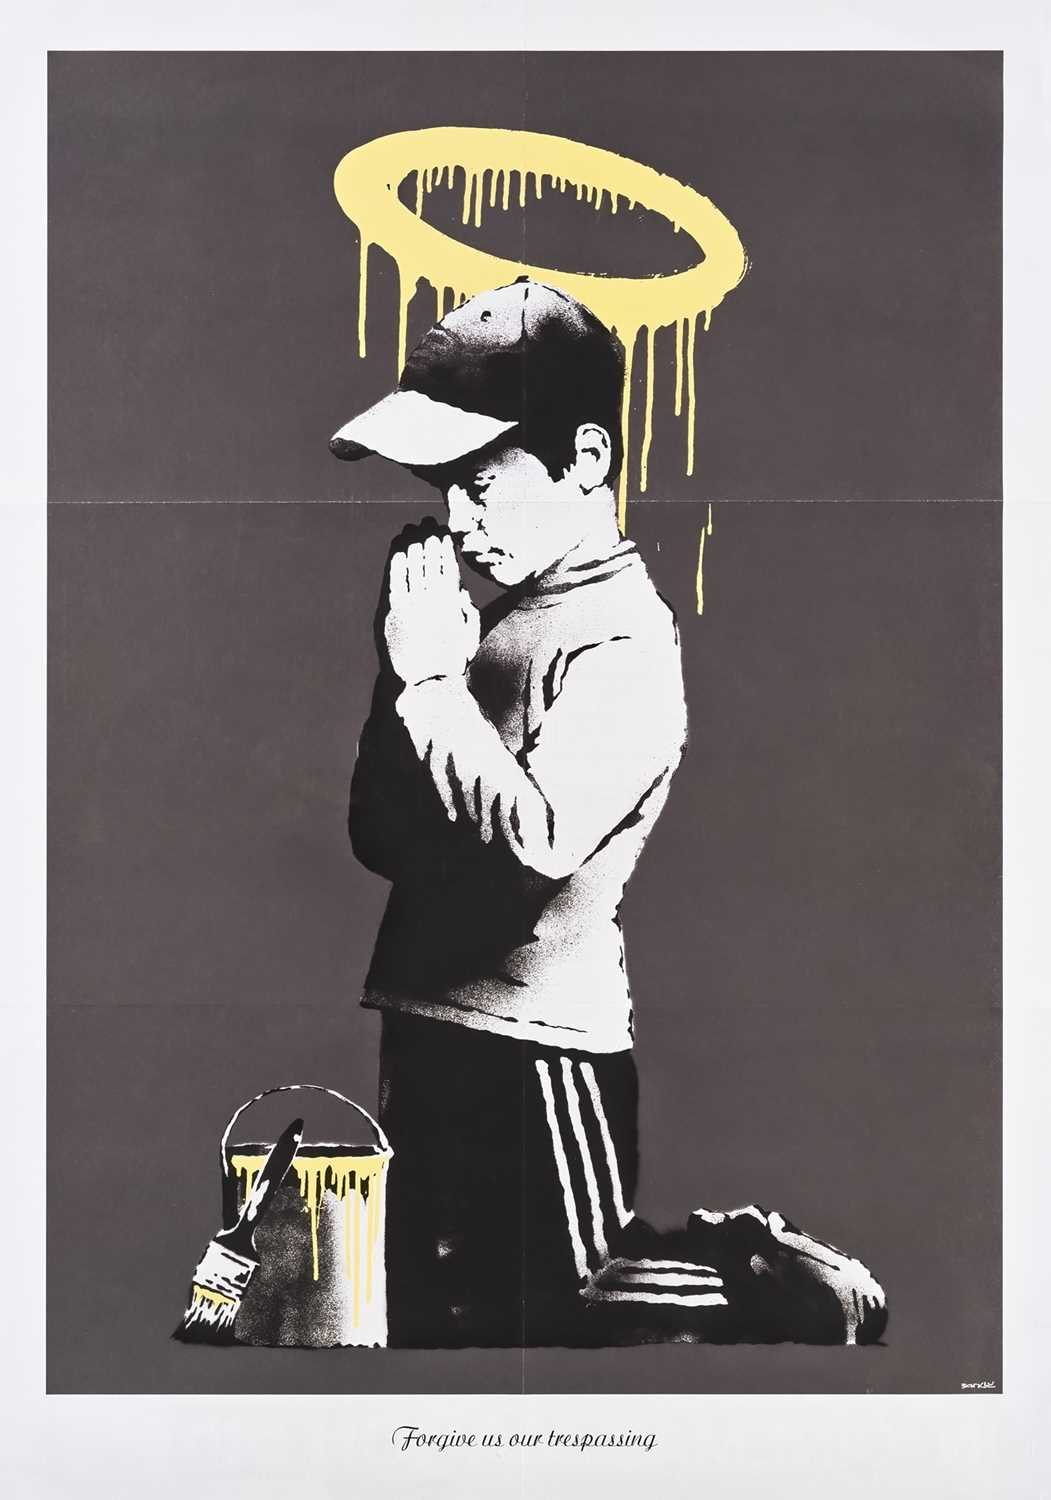 Lot 68 - Banksy (British 1974-), 'Forgive Us Our Trespassing', 2010